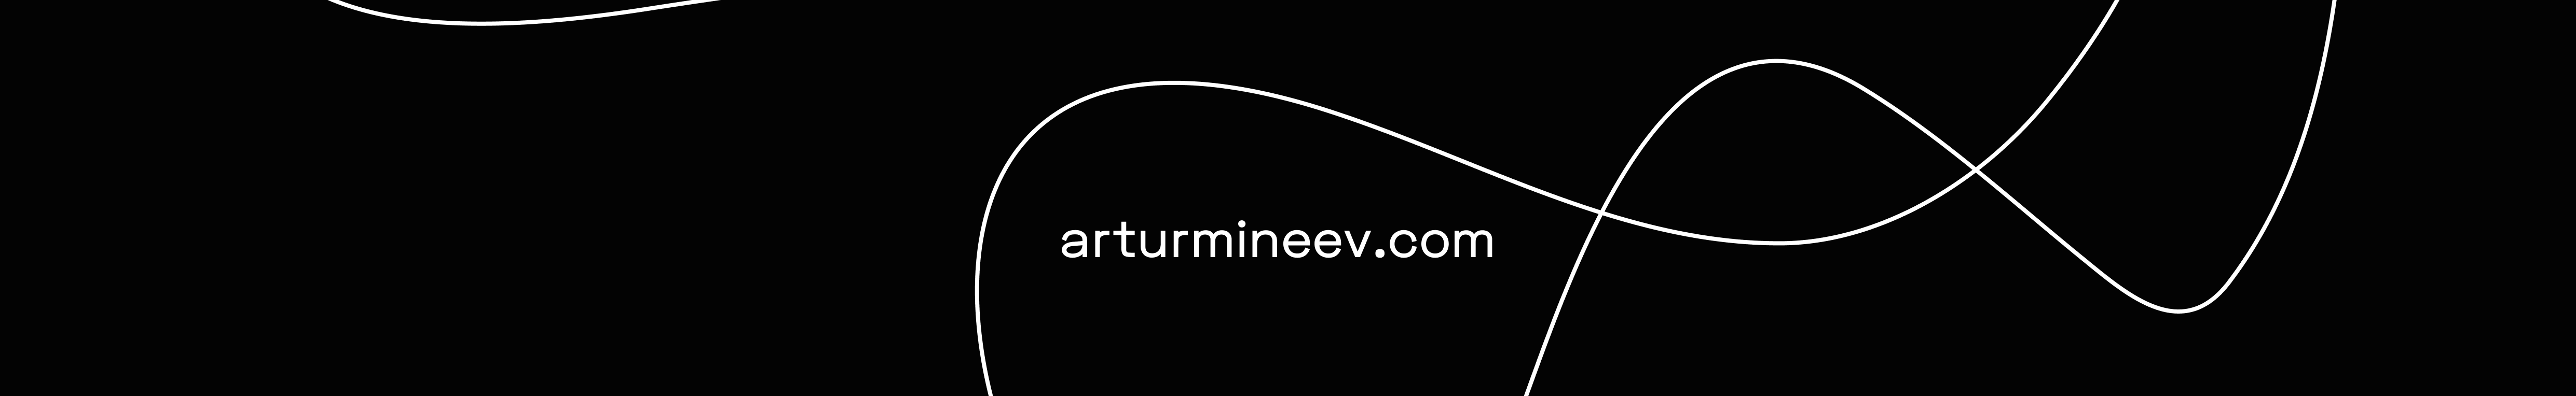 Arthur Mineev's profile banner